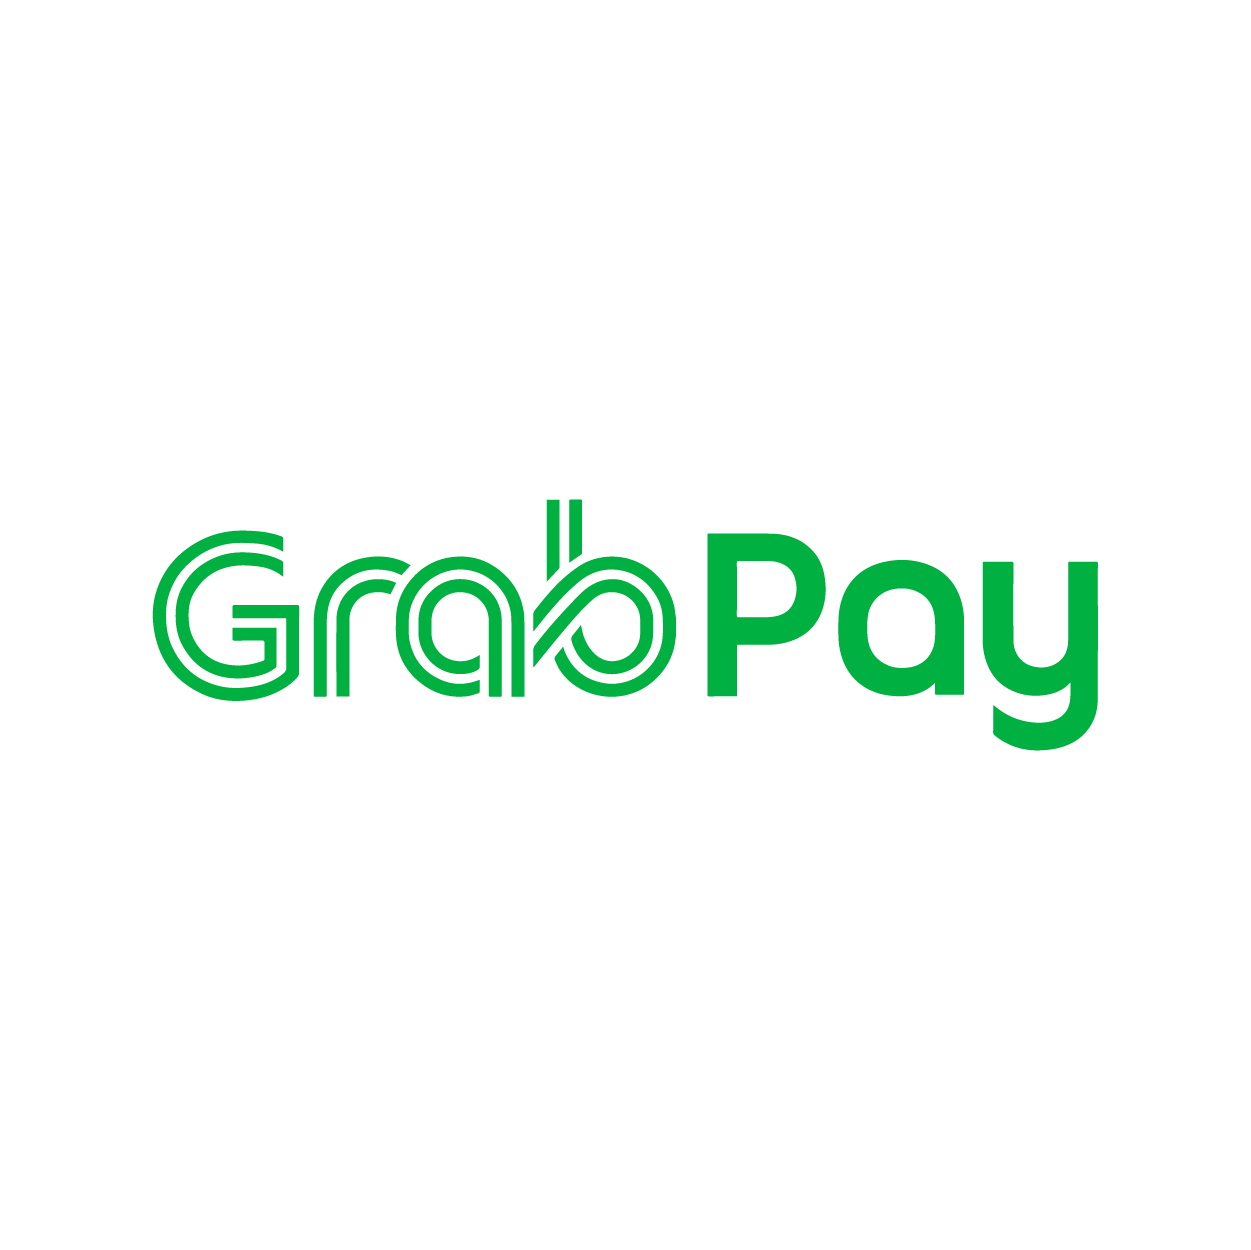 Grab pay